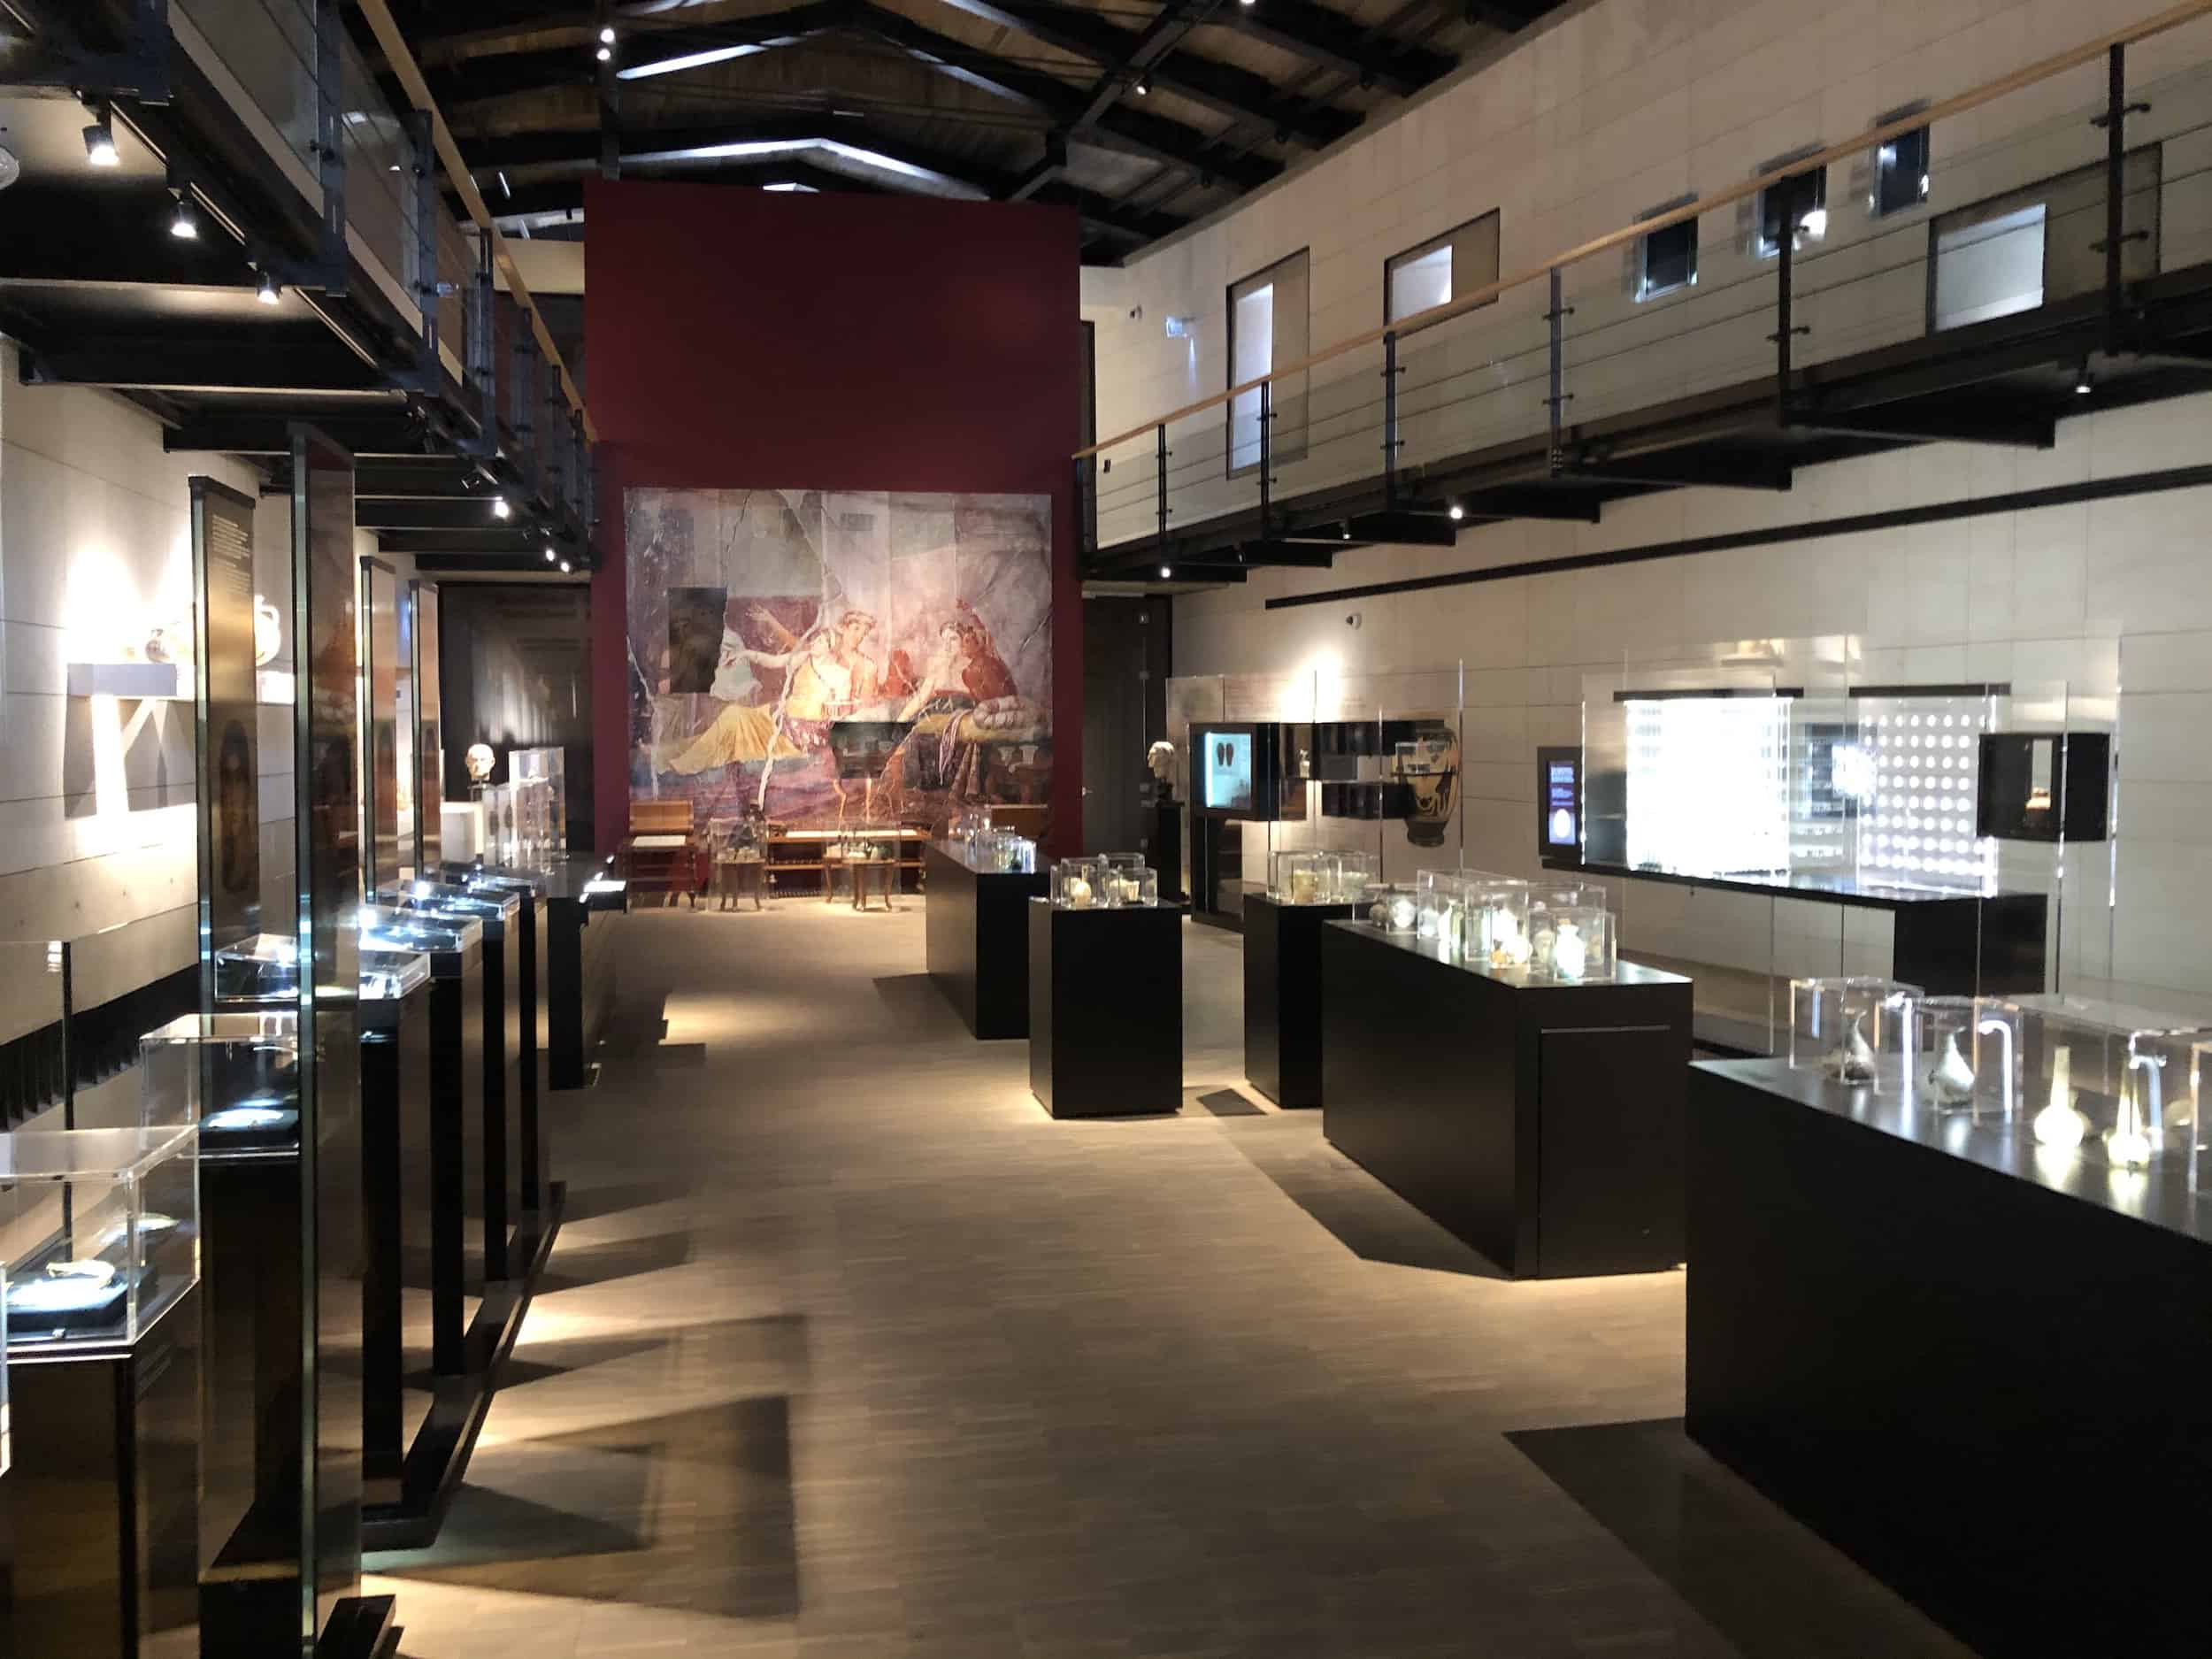 Main exhibition hall of the Erimtan Archaeology and Arts Museum in Ankara, Turkey